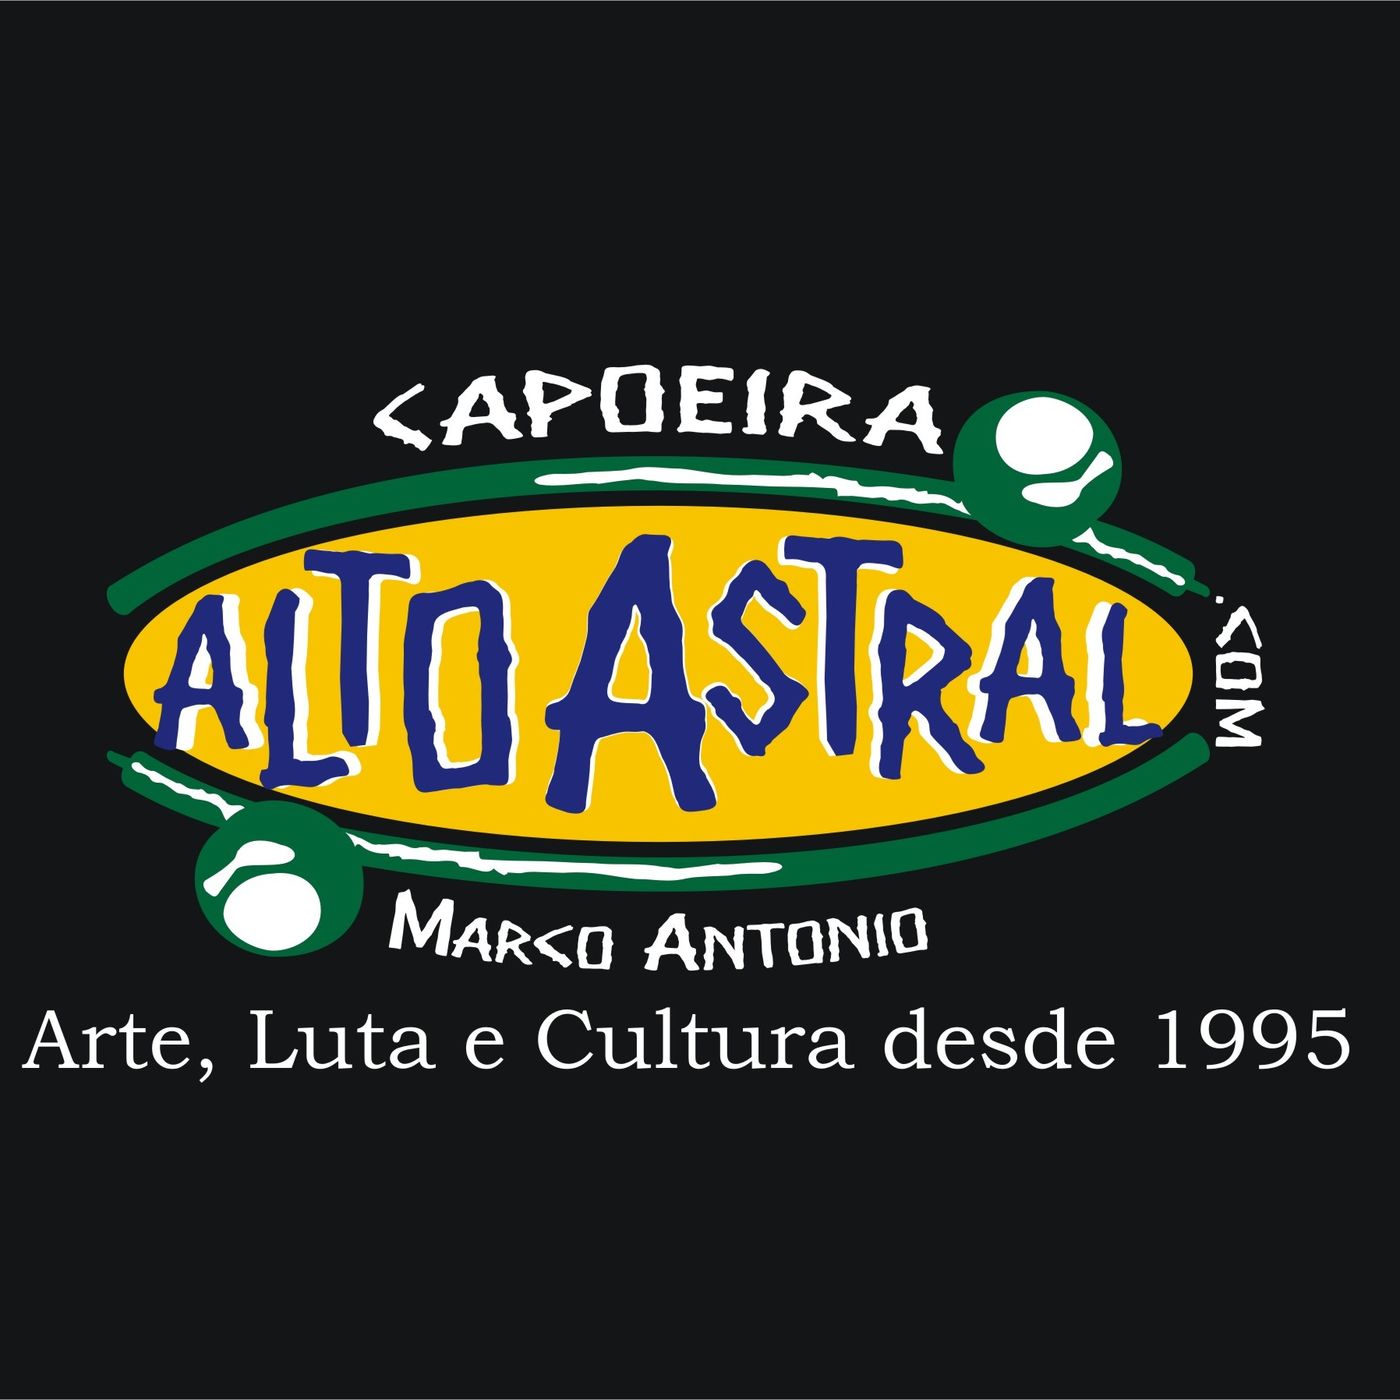 Radio Capoeira Alto Astral's show